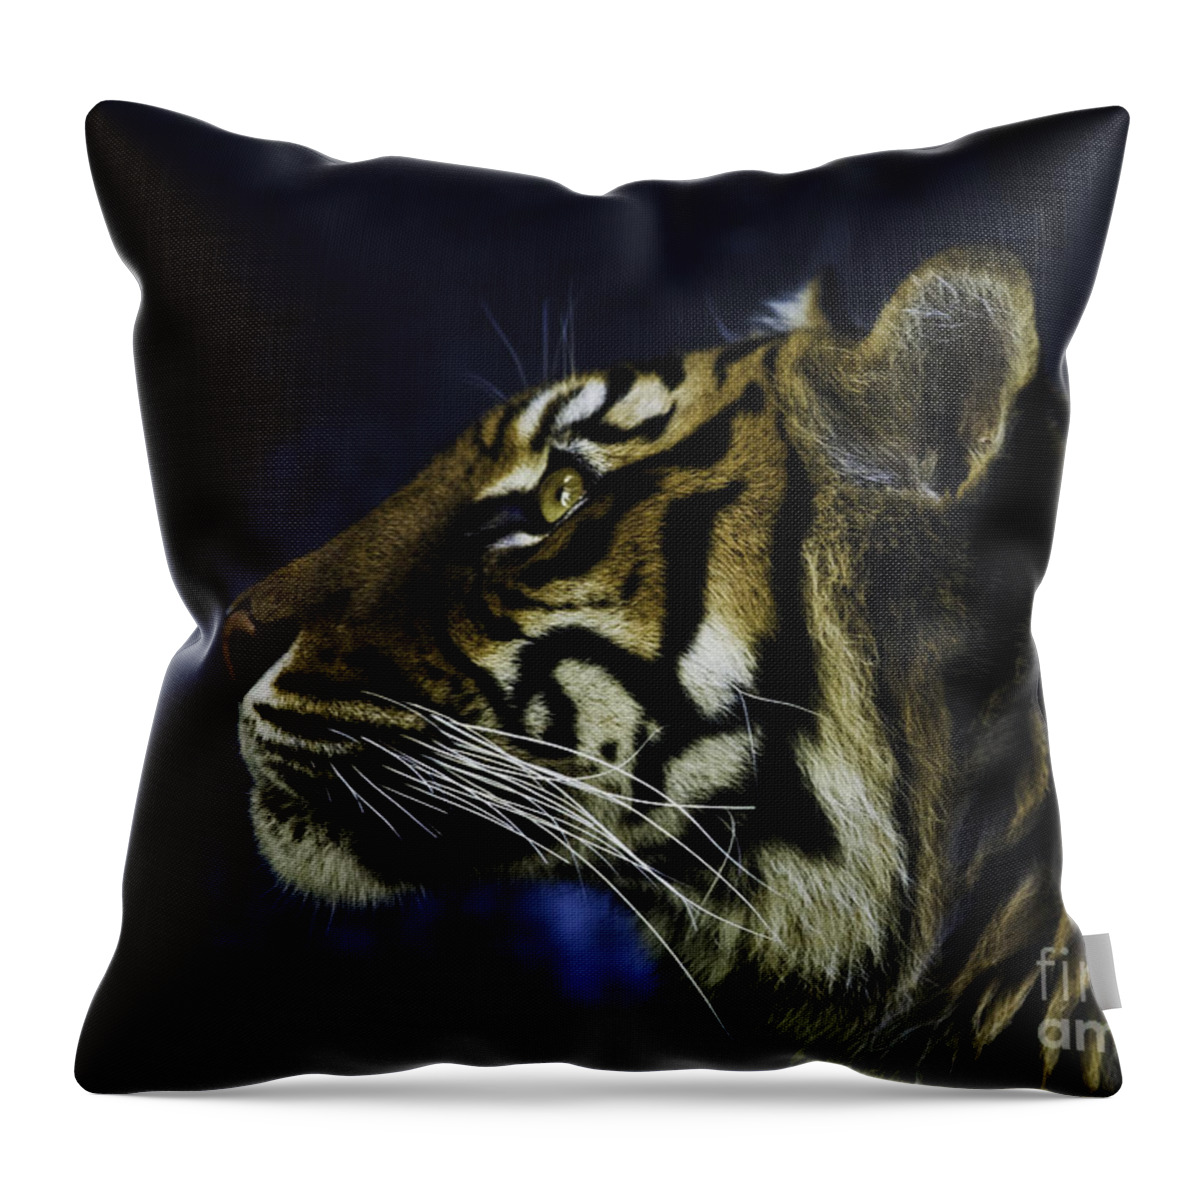 Sumatran Tiger Throw Pillow featuring the photograph Sumatran tiger profile by Sheila Smart Fine Art Photography